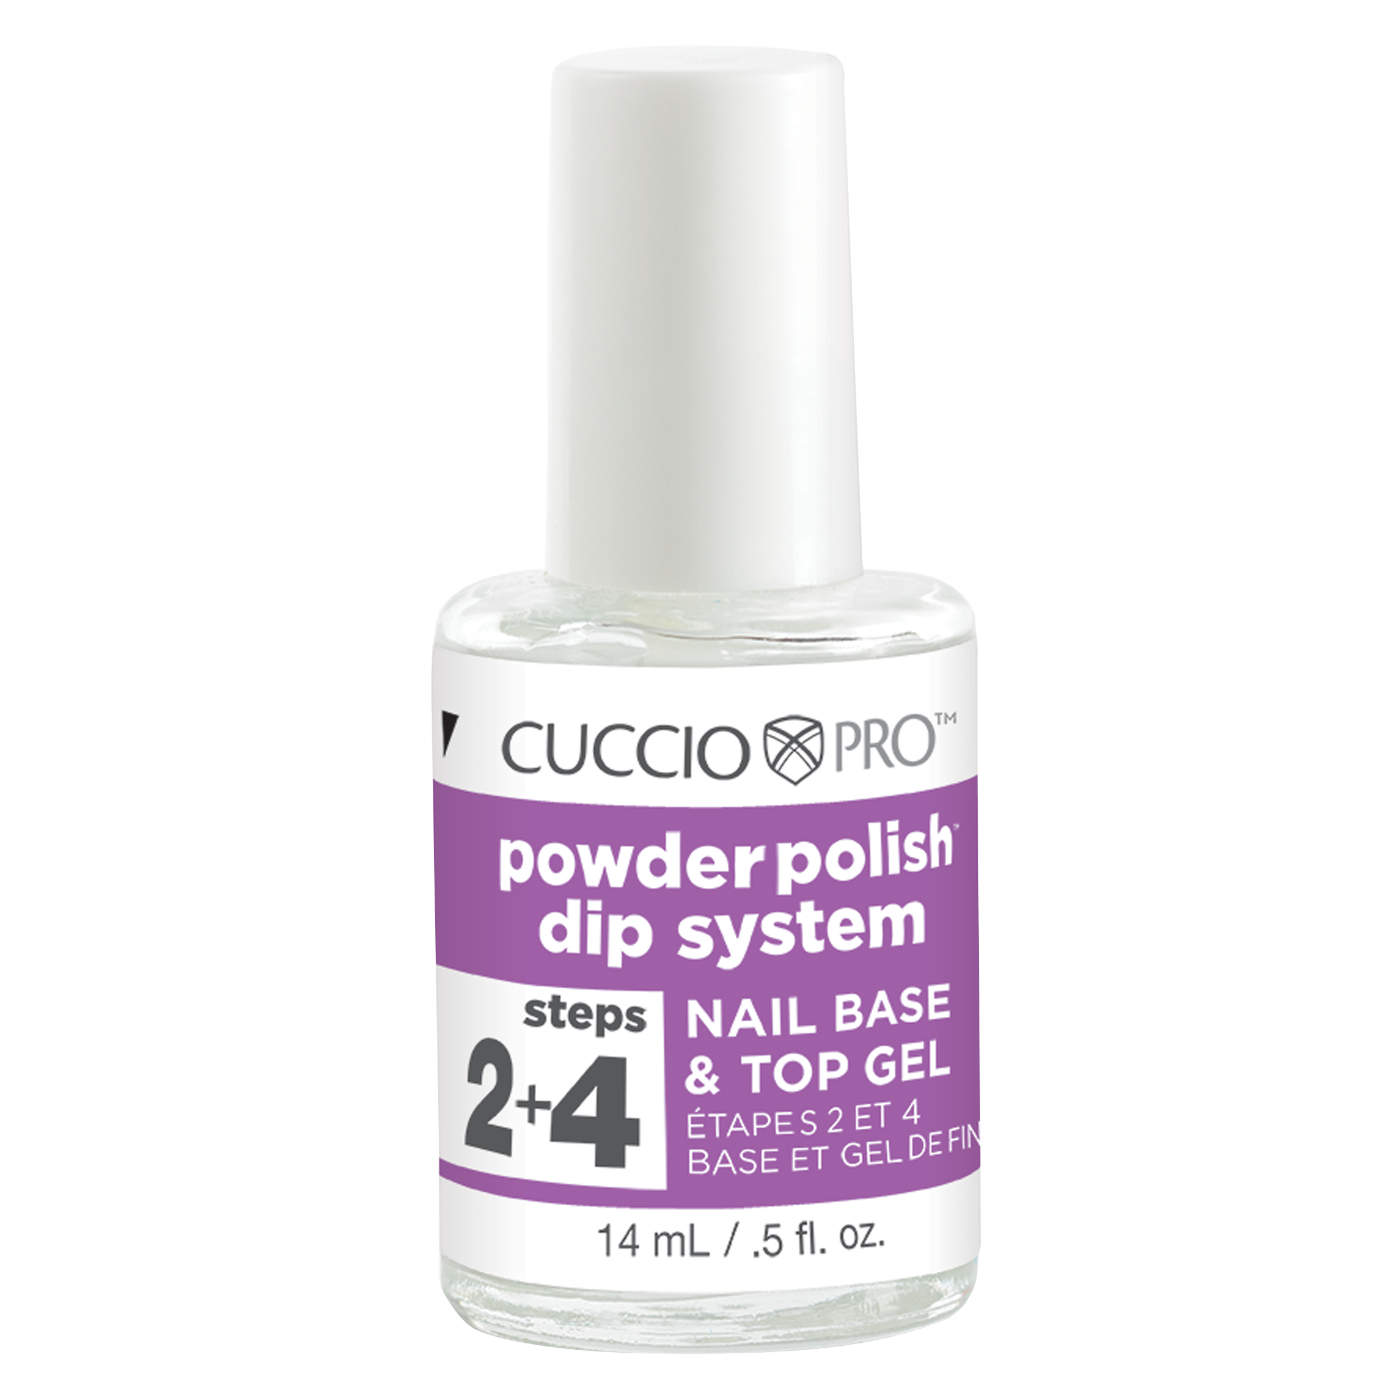 Powder Polish Dip System Nail Base & Top Gel